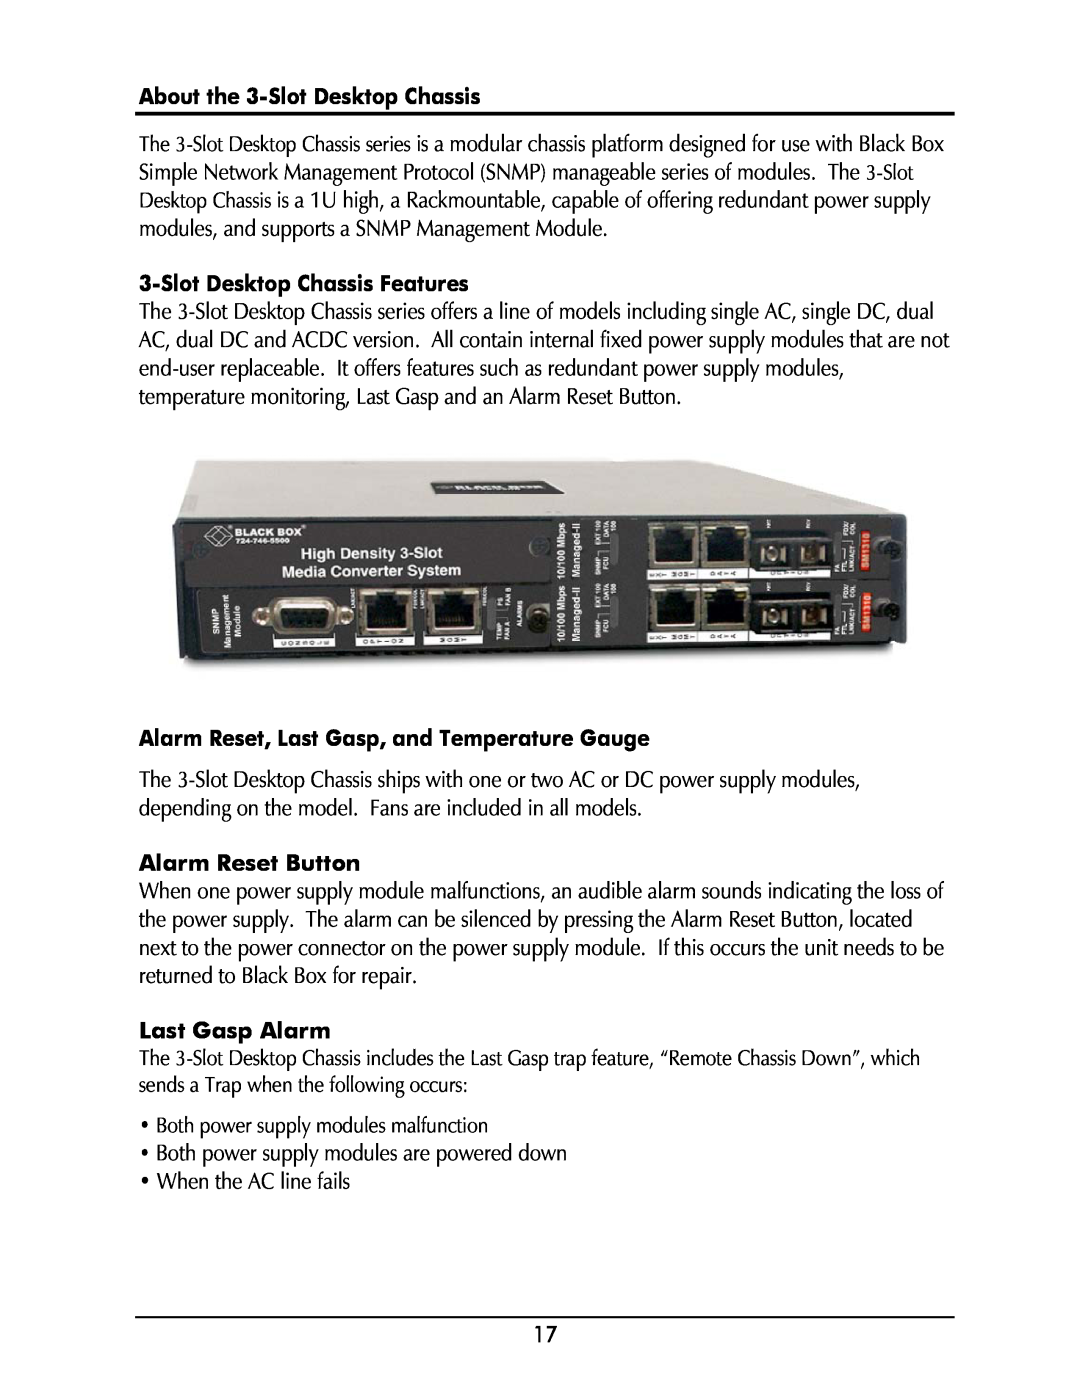 Black Box LMC5236A About the 3-Slot Desktop Chassis, Slot Desktop Chassis Features, Alarm Reset Button, Last Gasp Alarm 